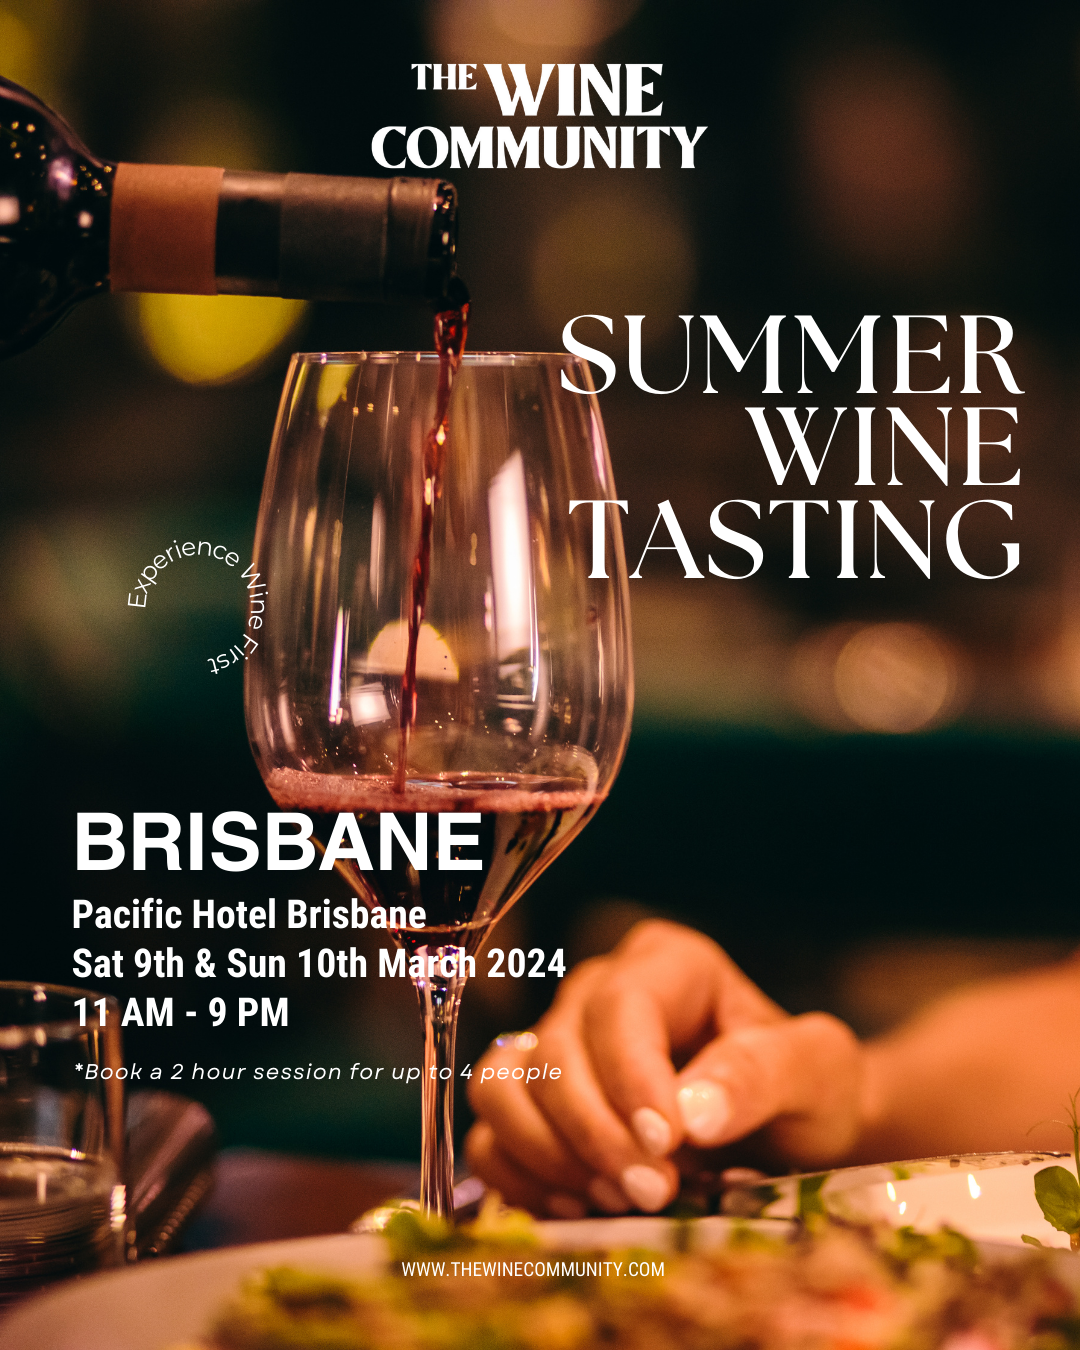 WINE TASTING at Brisbane- Sunday 10th March 2024